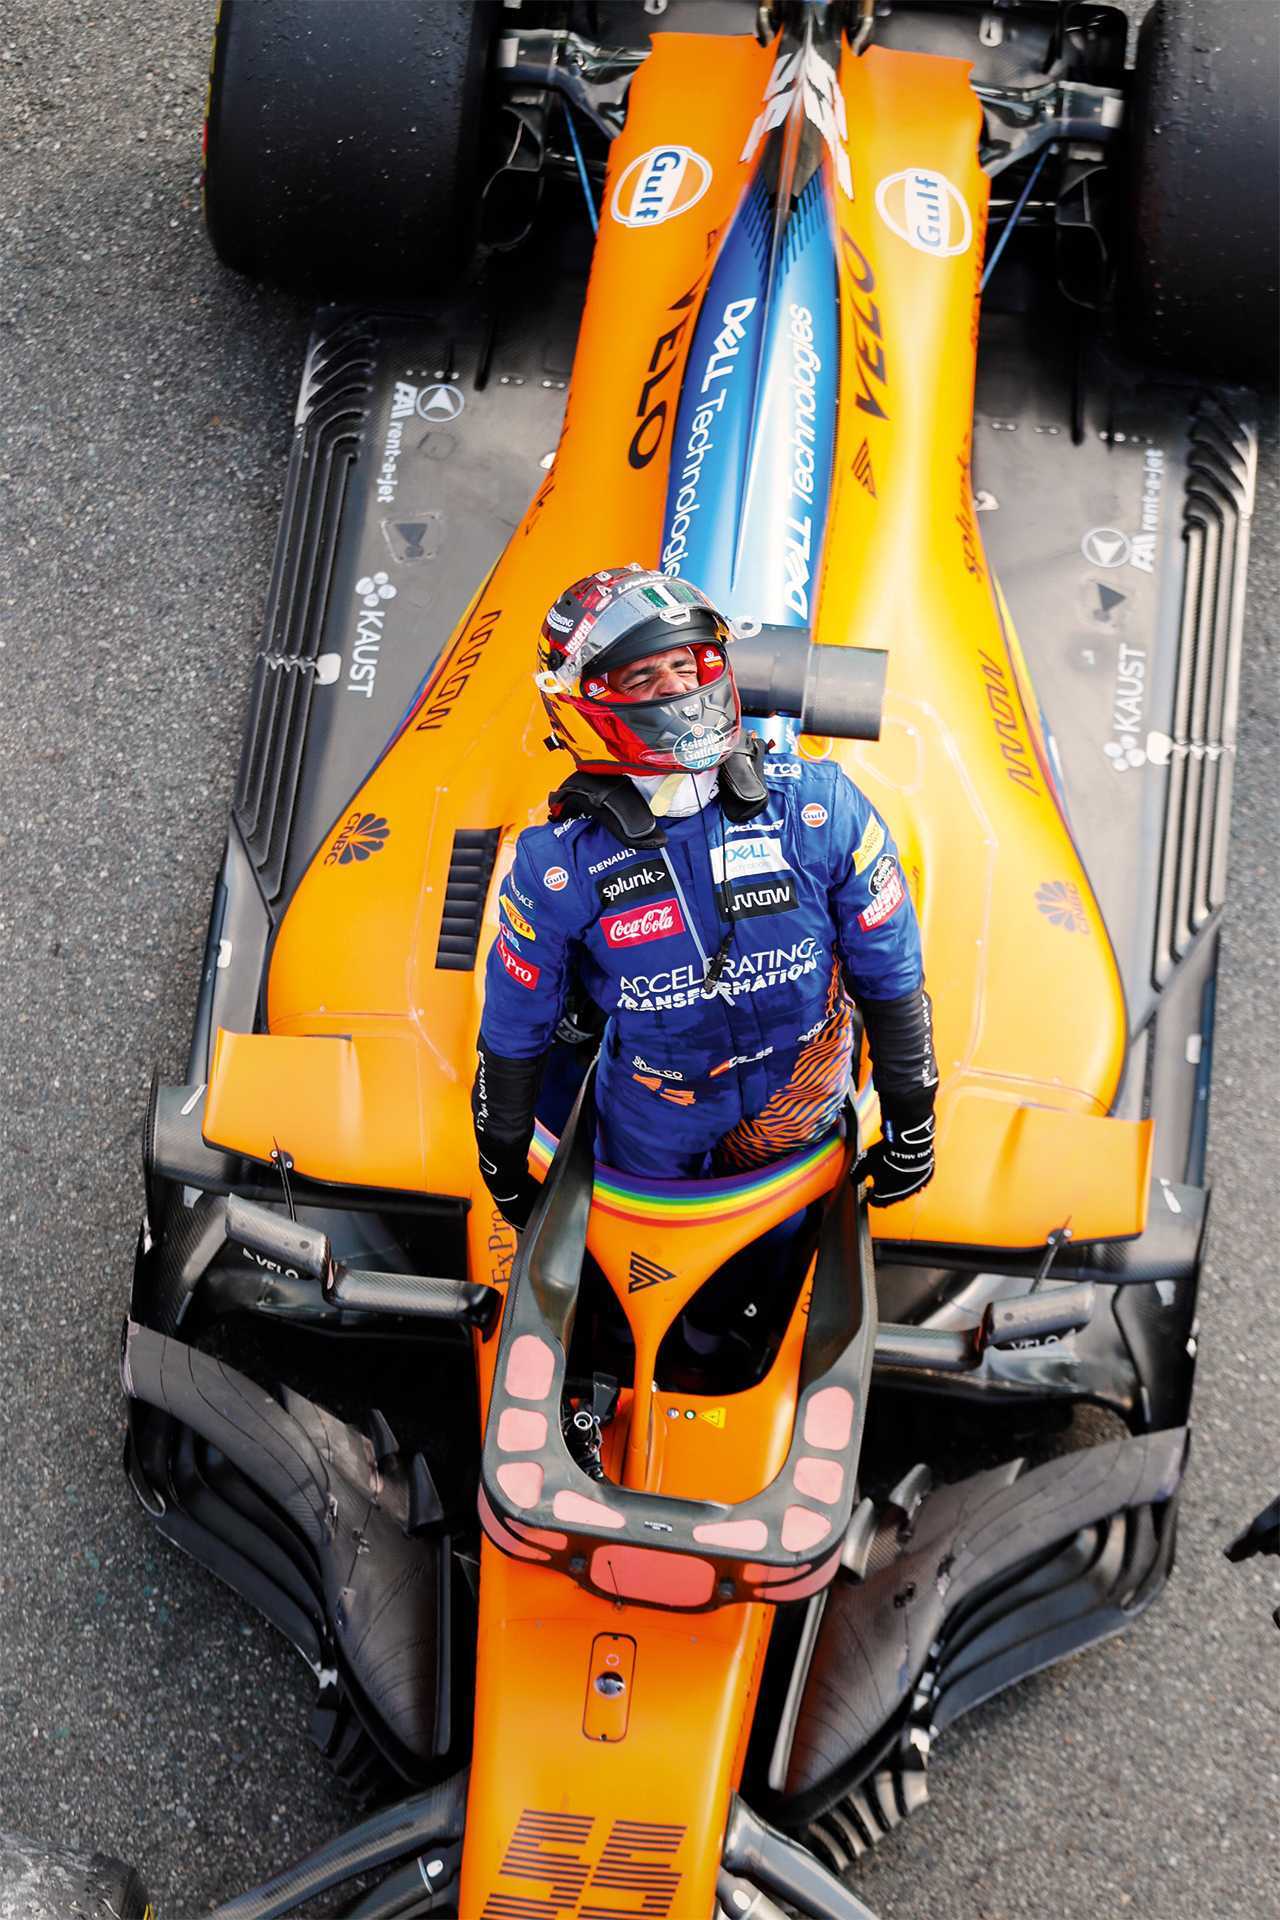 Carlos Sainz Jr, McLaren racing driver at the 2020 Italian Grand Prix